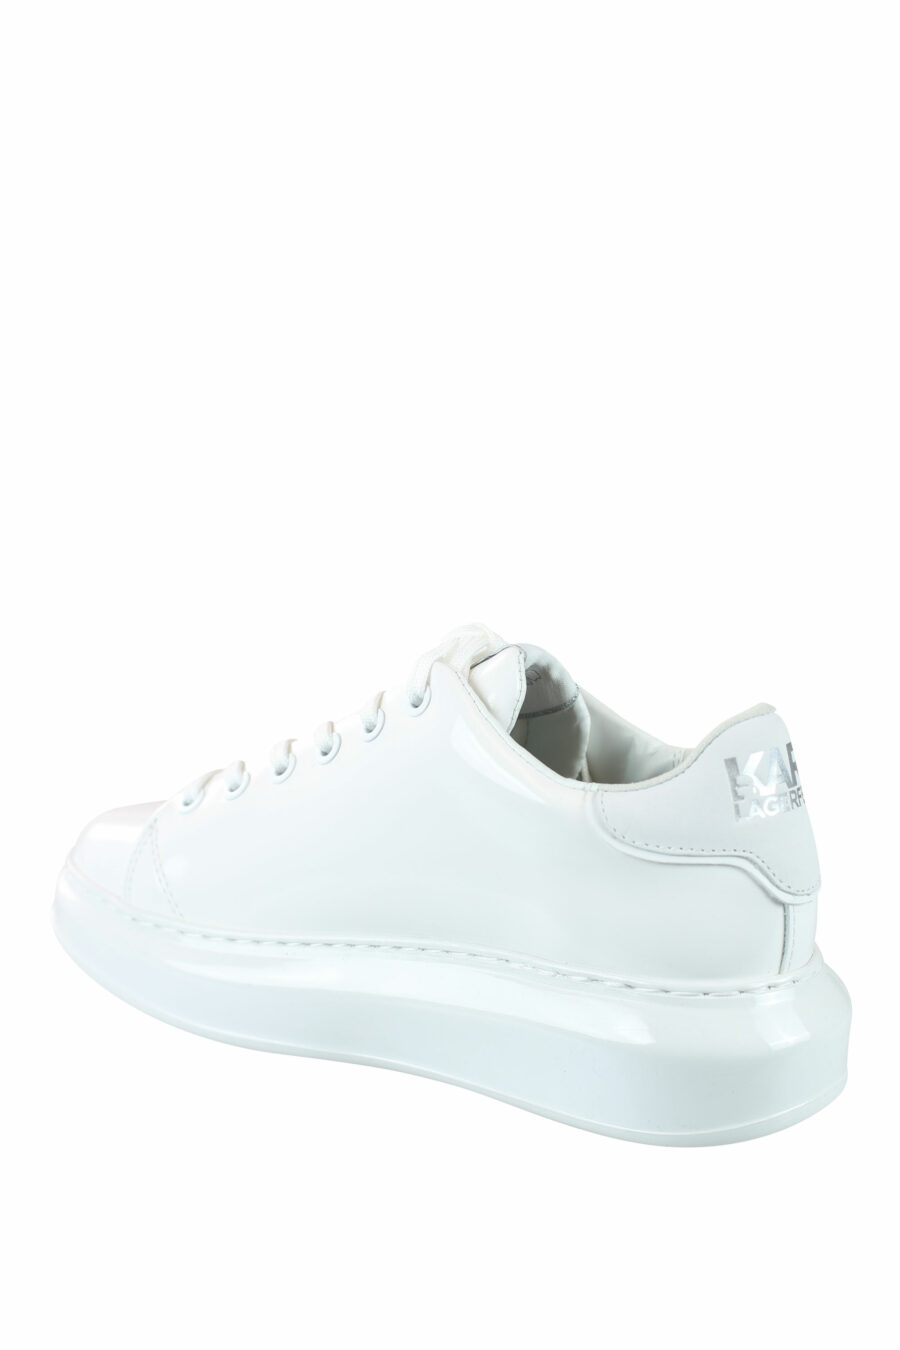 Zapatillas blancas brillantes con logo lettering "rue st guillaume" - IMG 0015 1